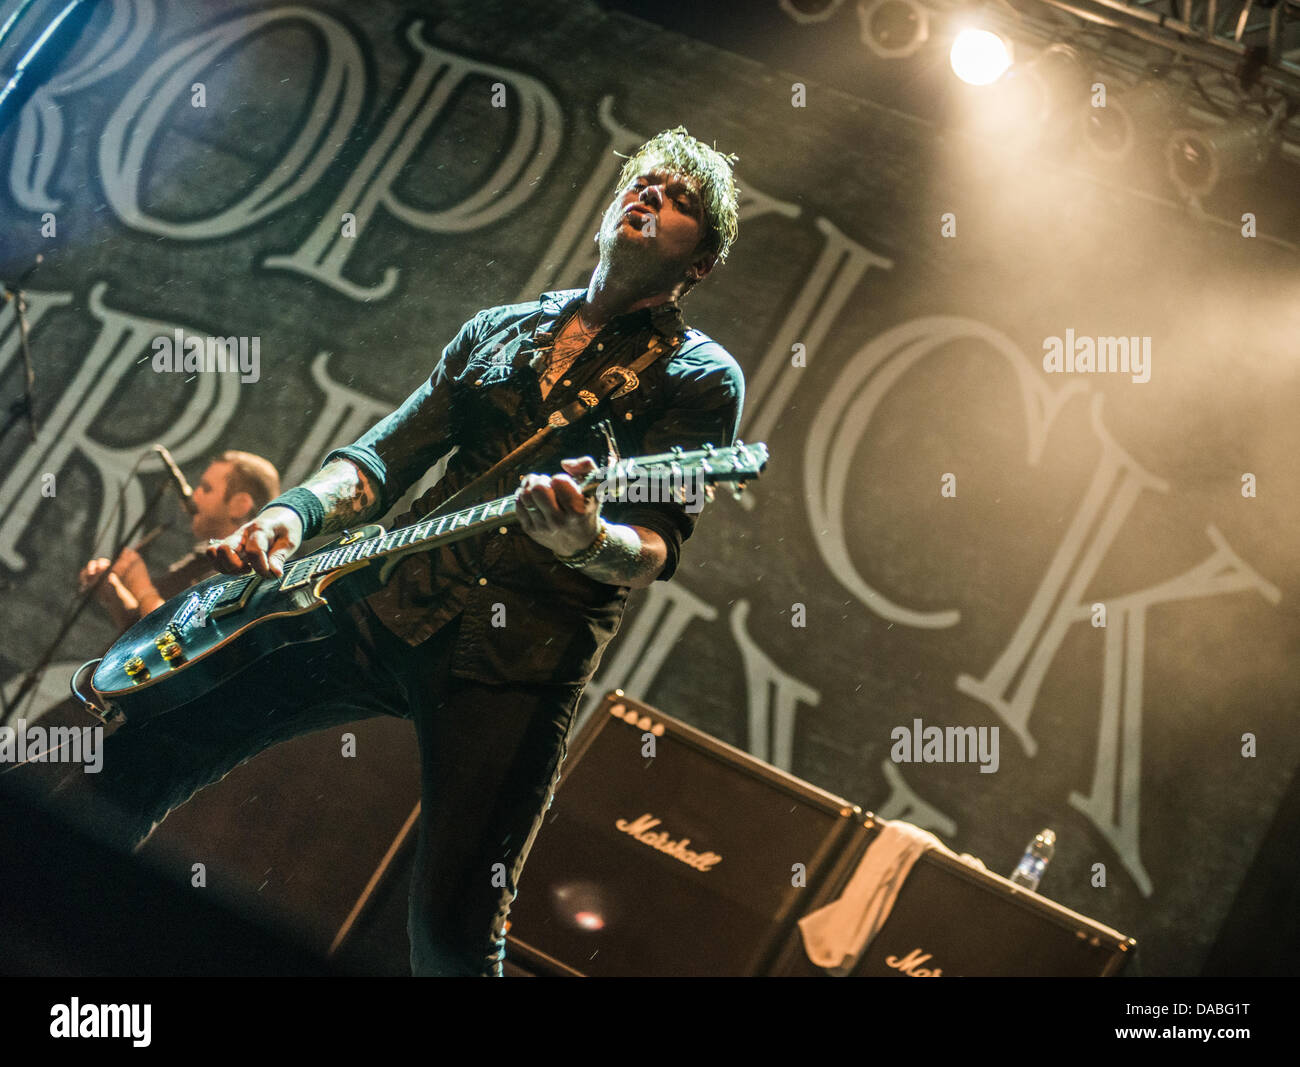 Dropkick Murphys perform live, guitarist James Lynch Stock Photo